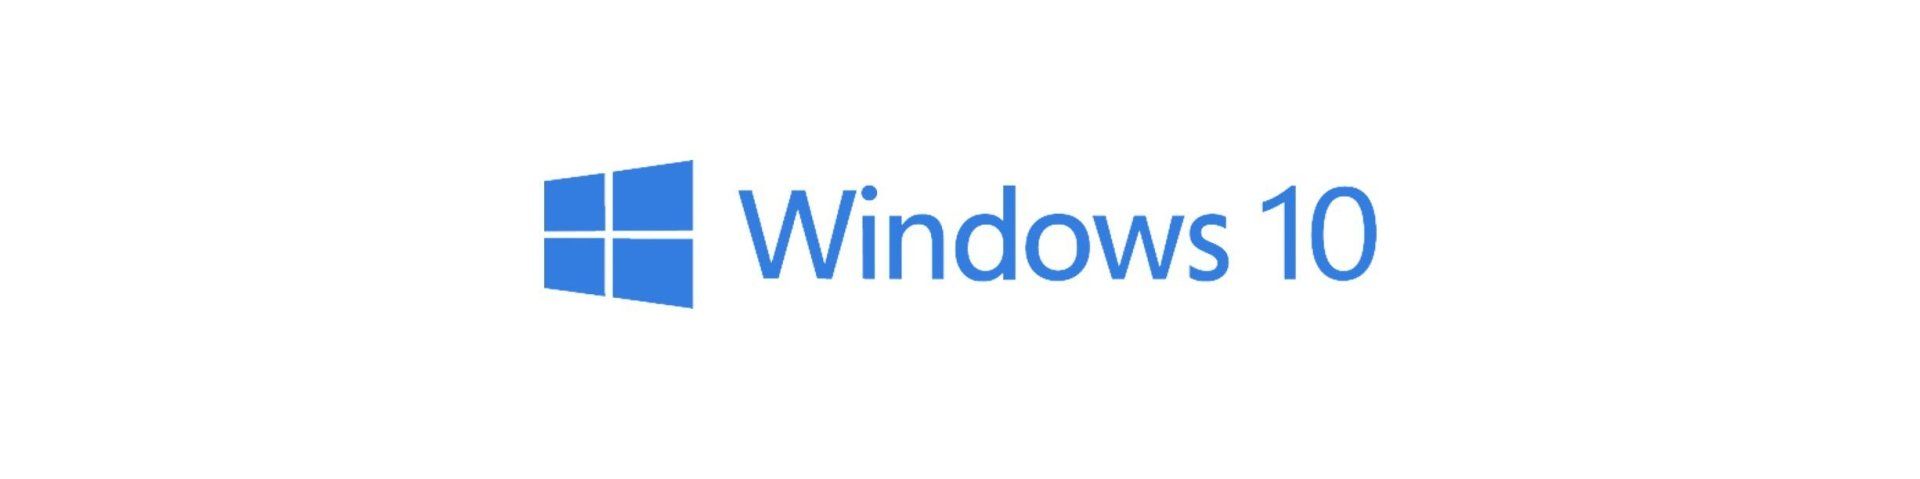 Windows-10-11.jpg